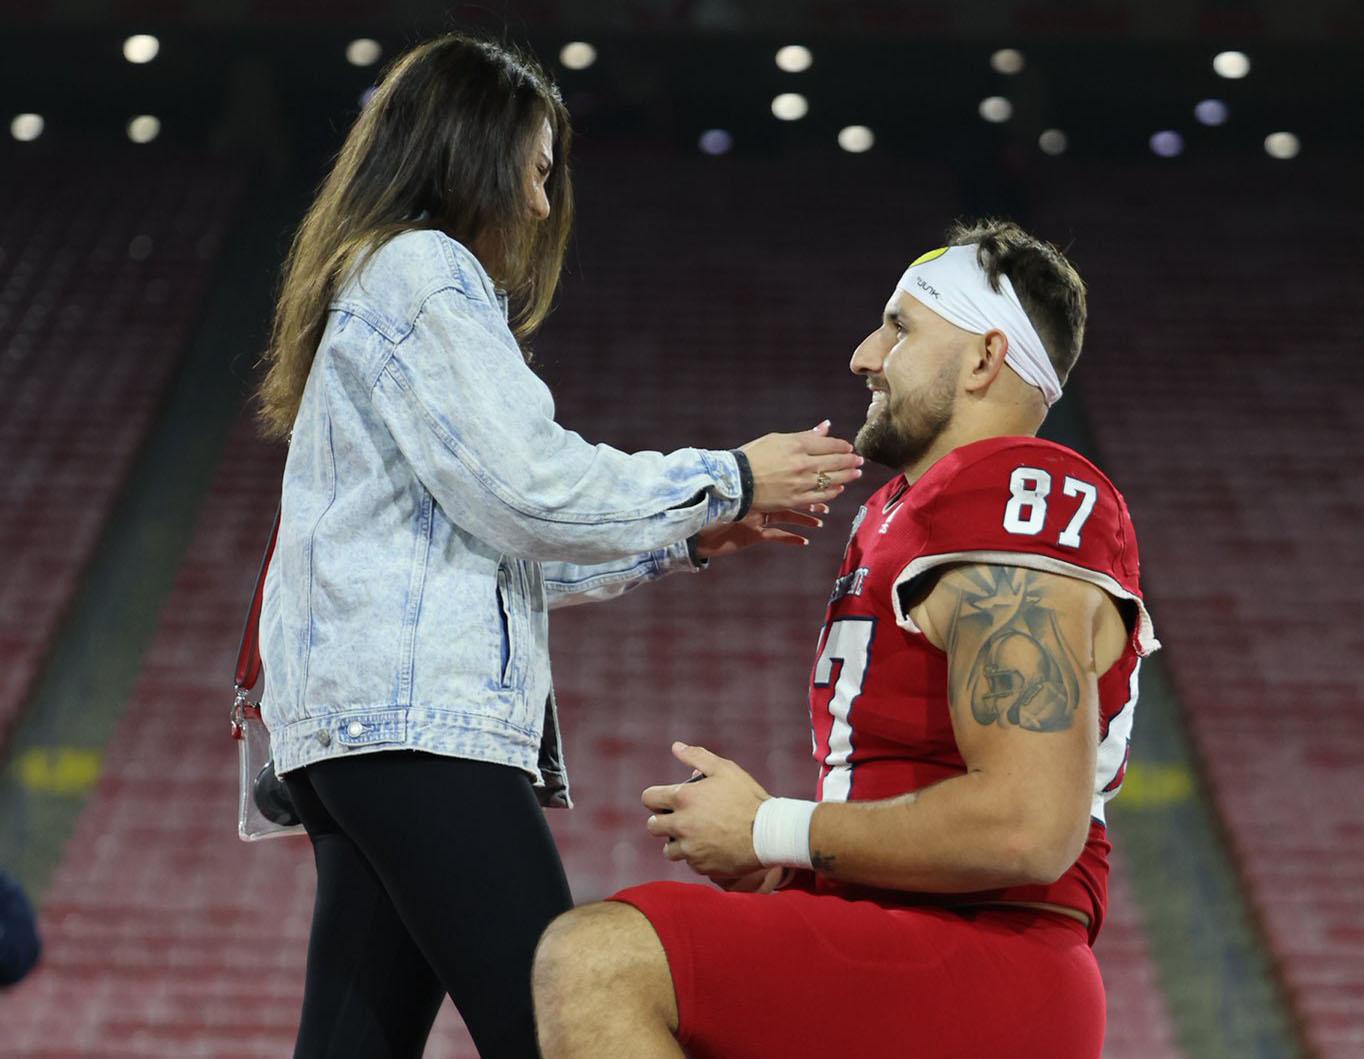 Raymond Pauwels Jr. proposed to Lexi Ledesma after the game on Friday night. (Courtesy of Fresno State Athletics)